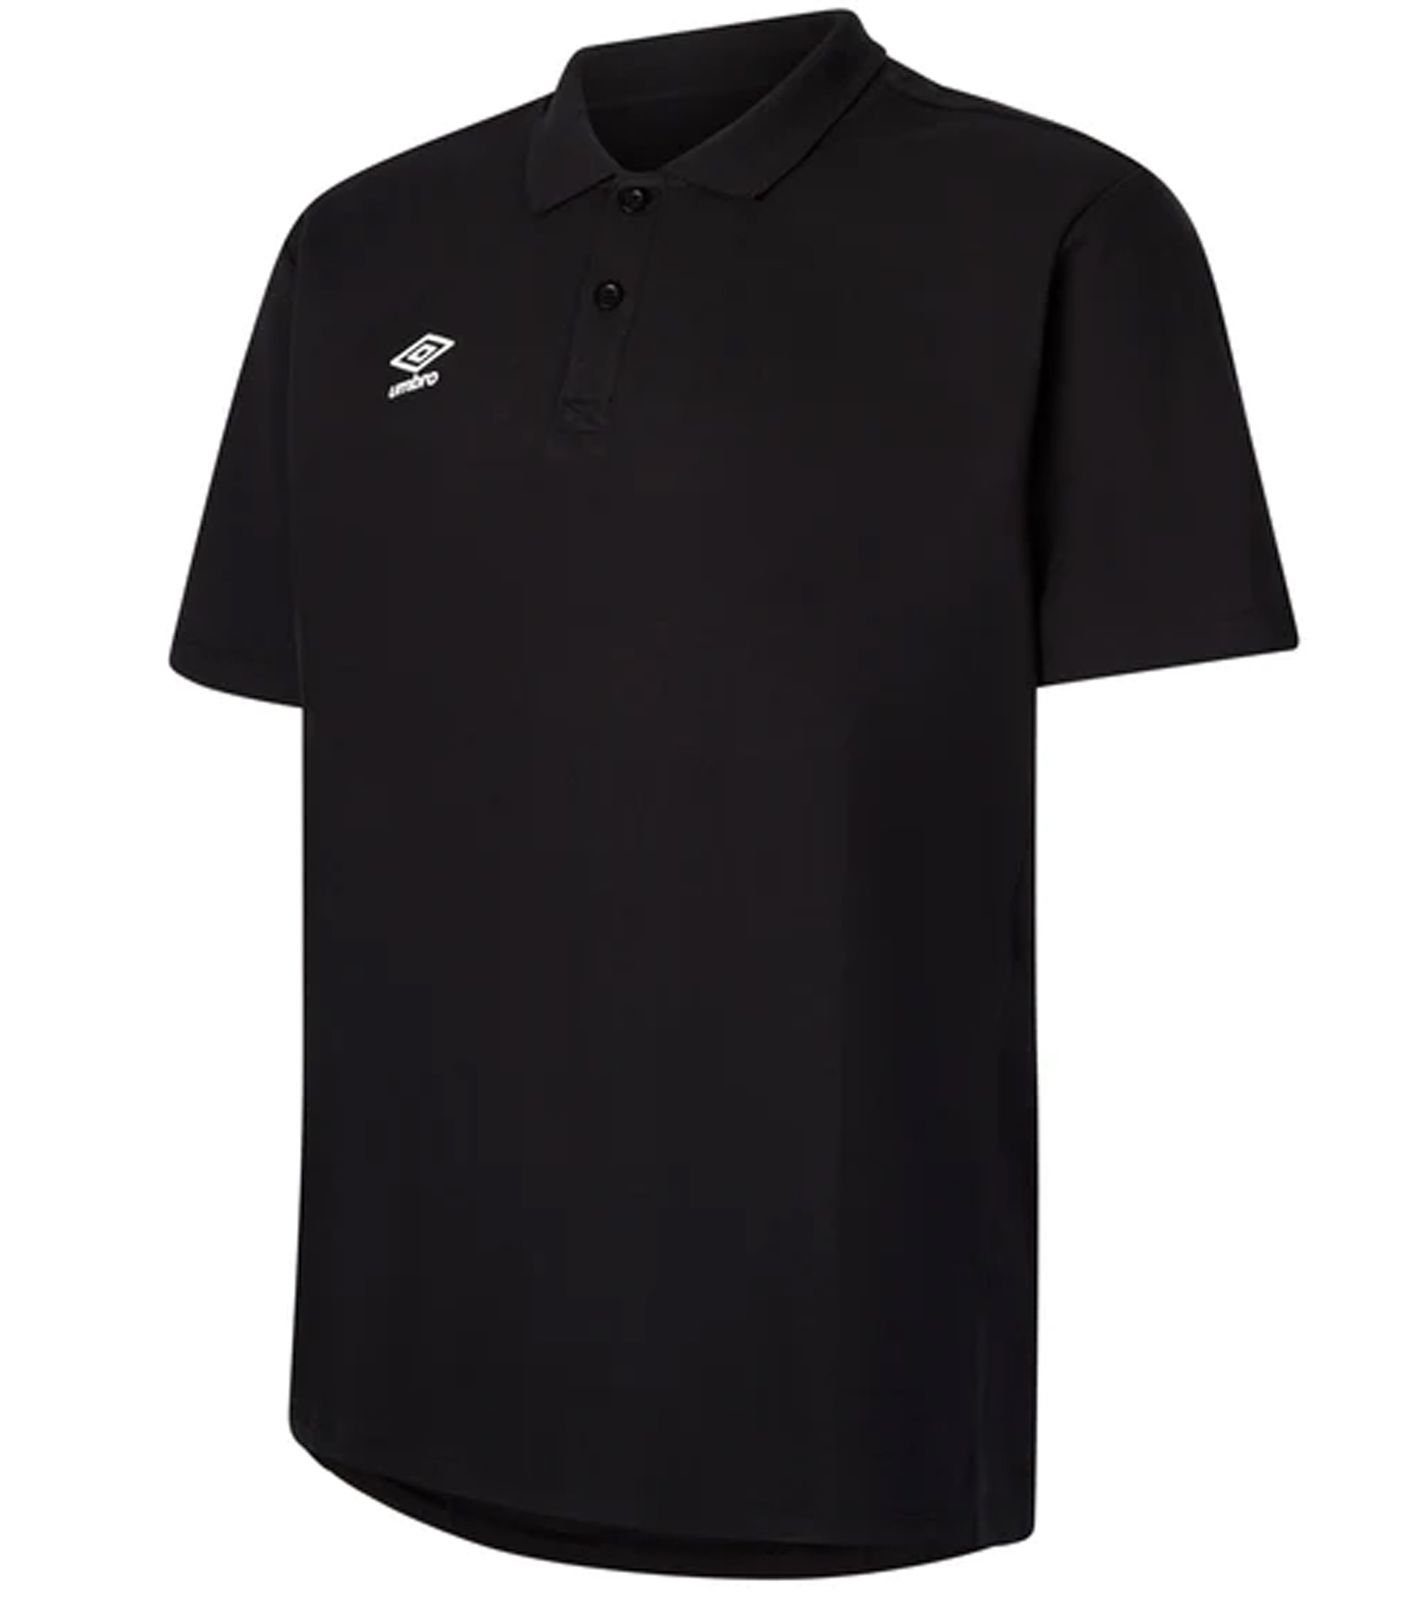 Golf-Shirt UMTM0323-090 klassisches Essential Club Herren umbro Umbro Polo-Shirt Schwarz Polohemd Rundhalsshirt